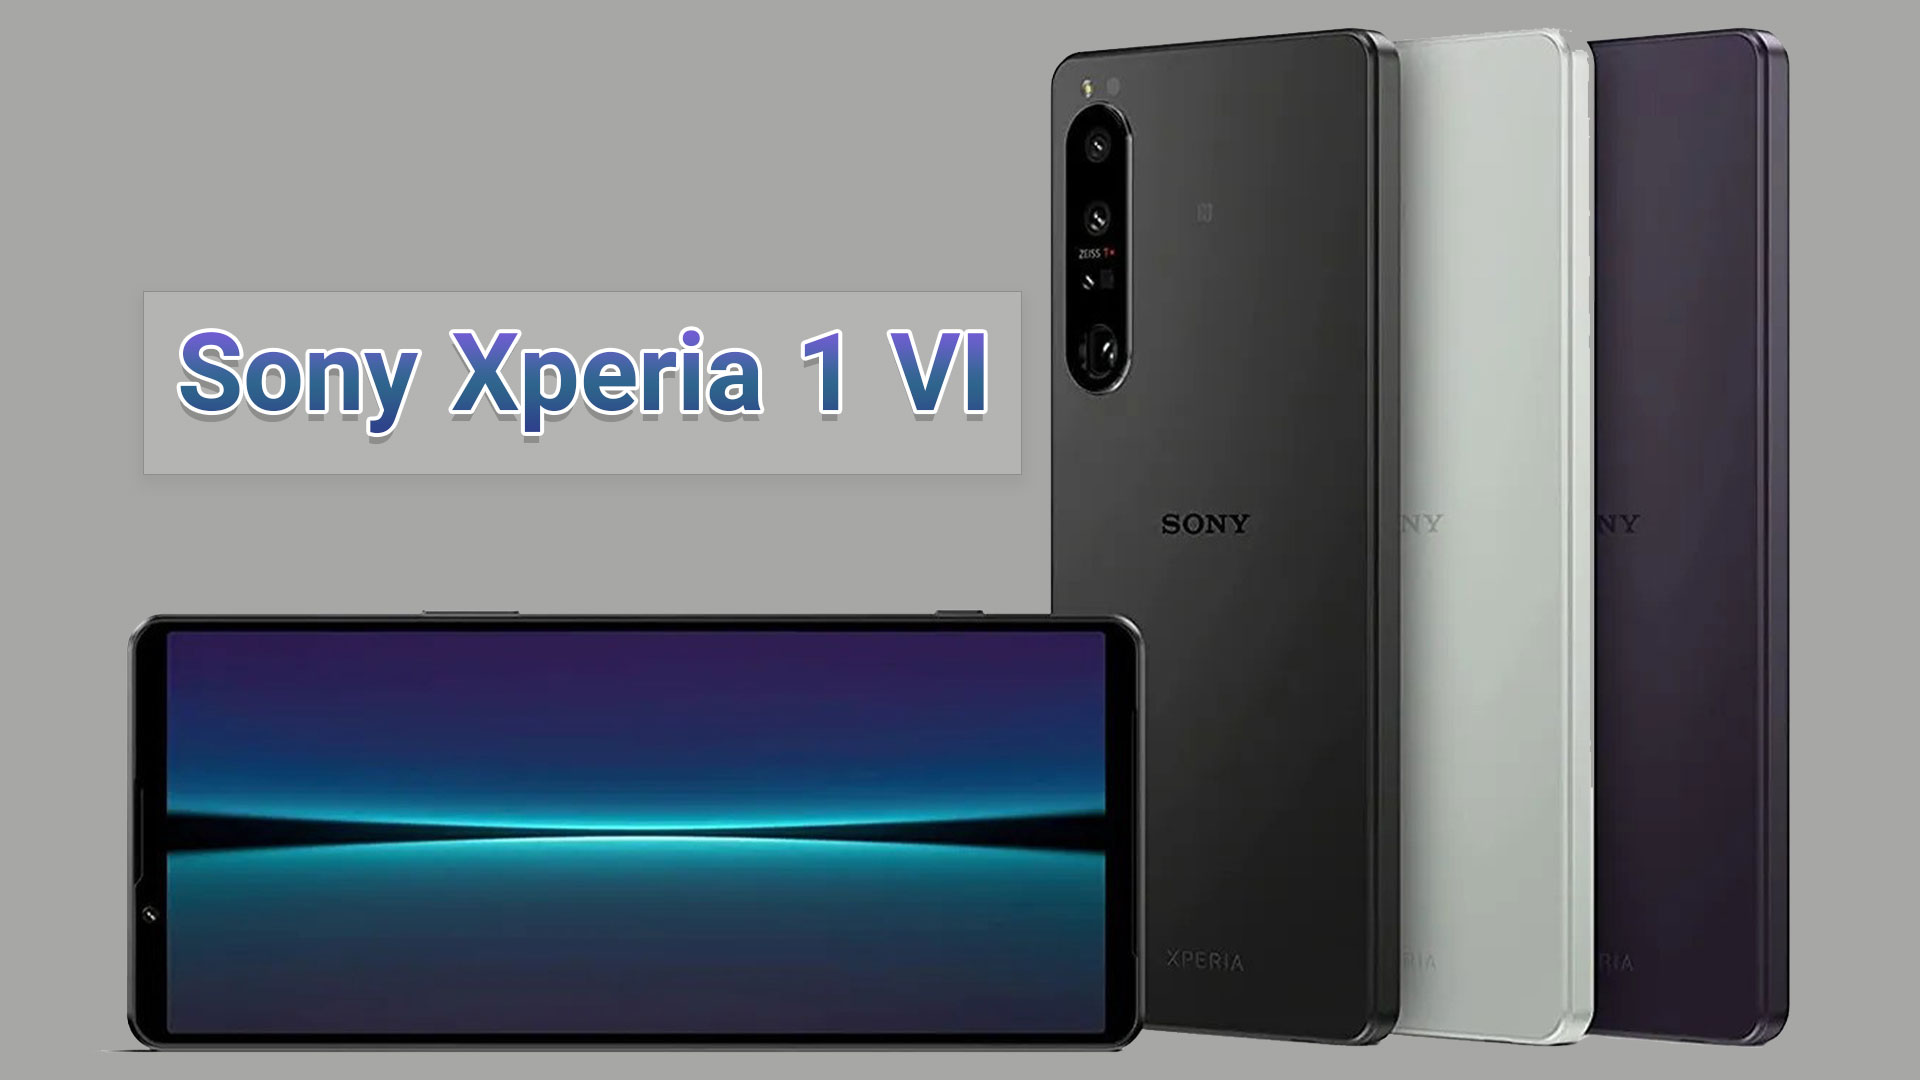 SonyXperia 1 VI